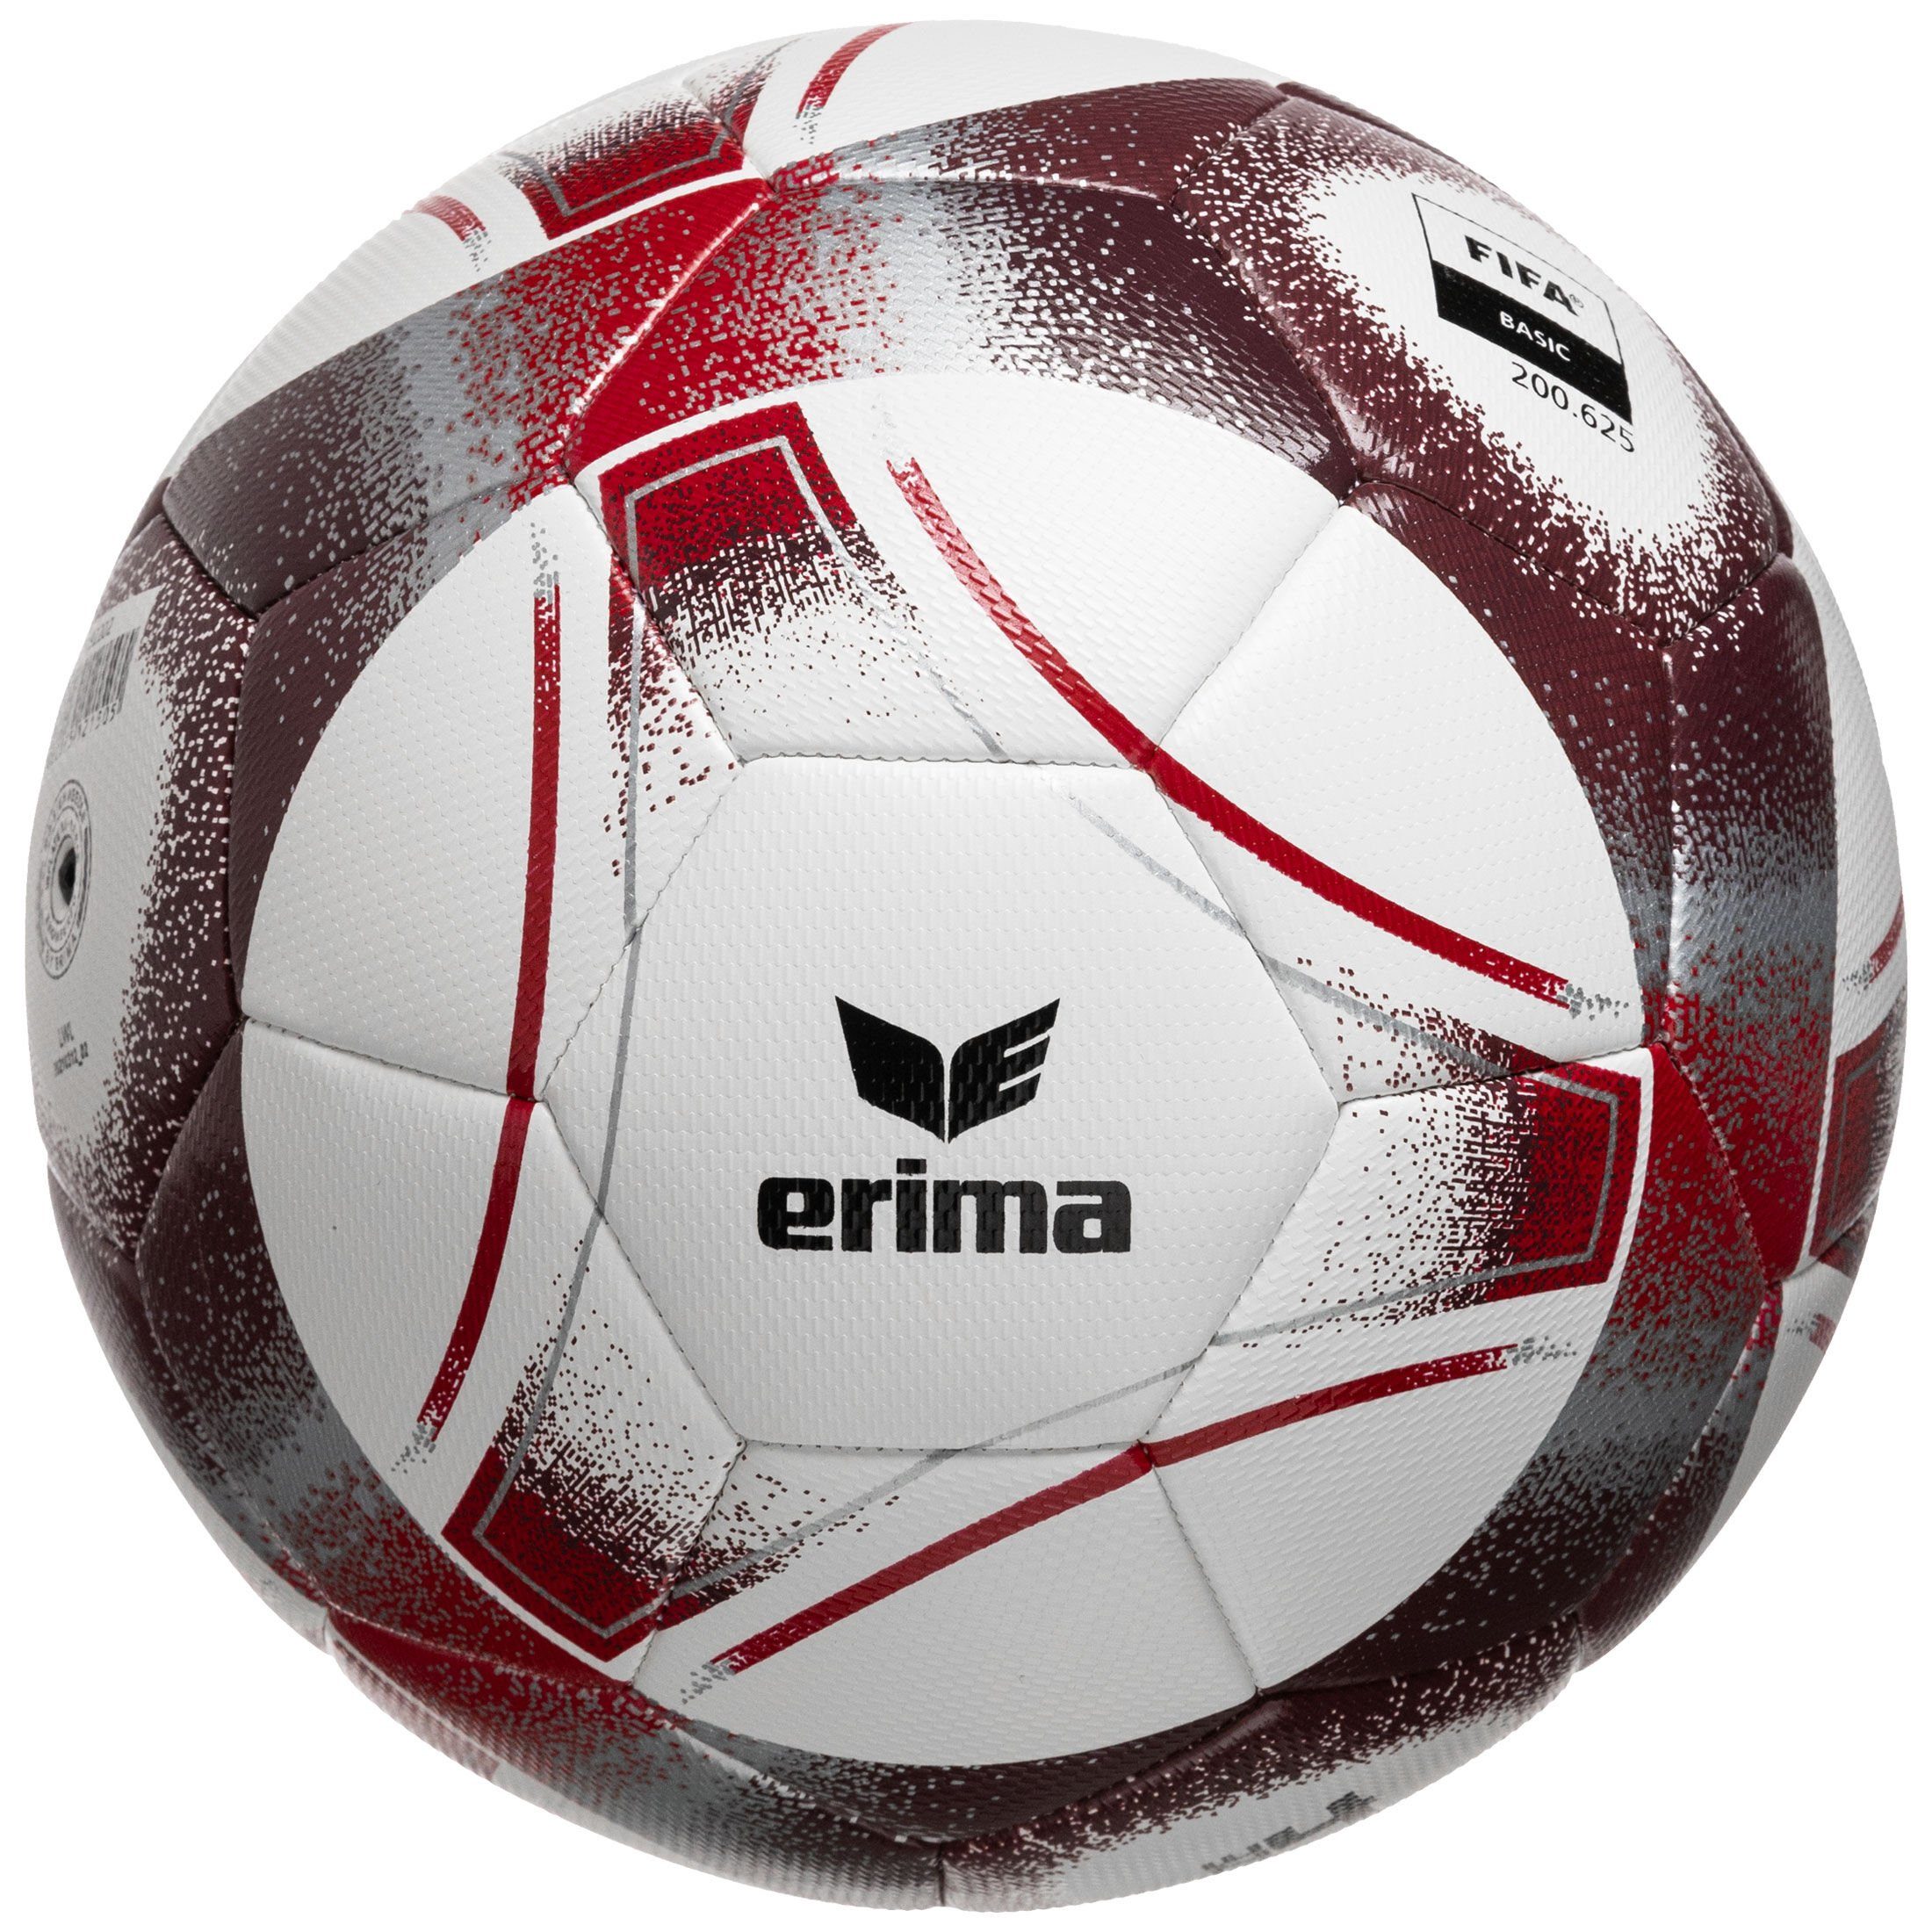 Hybrid Training Fußball Erima / Fußball rot bordeaux